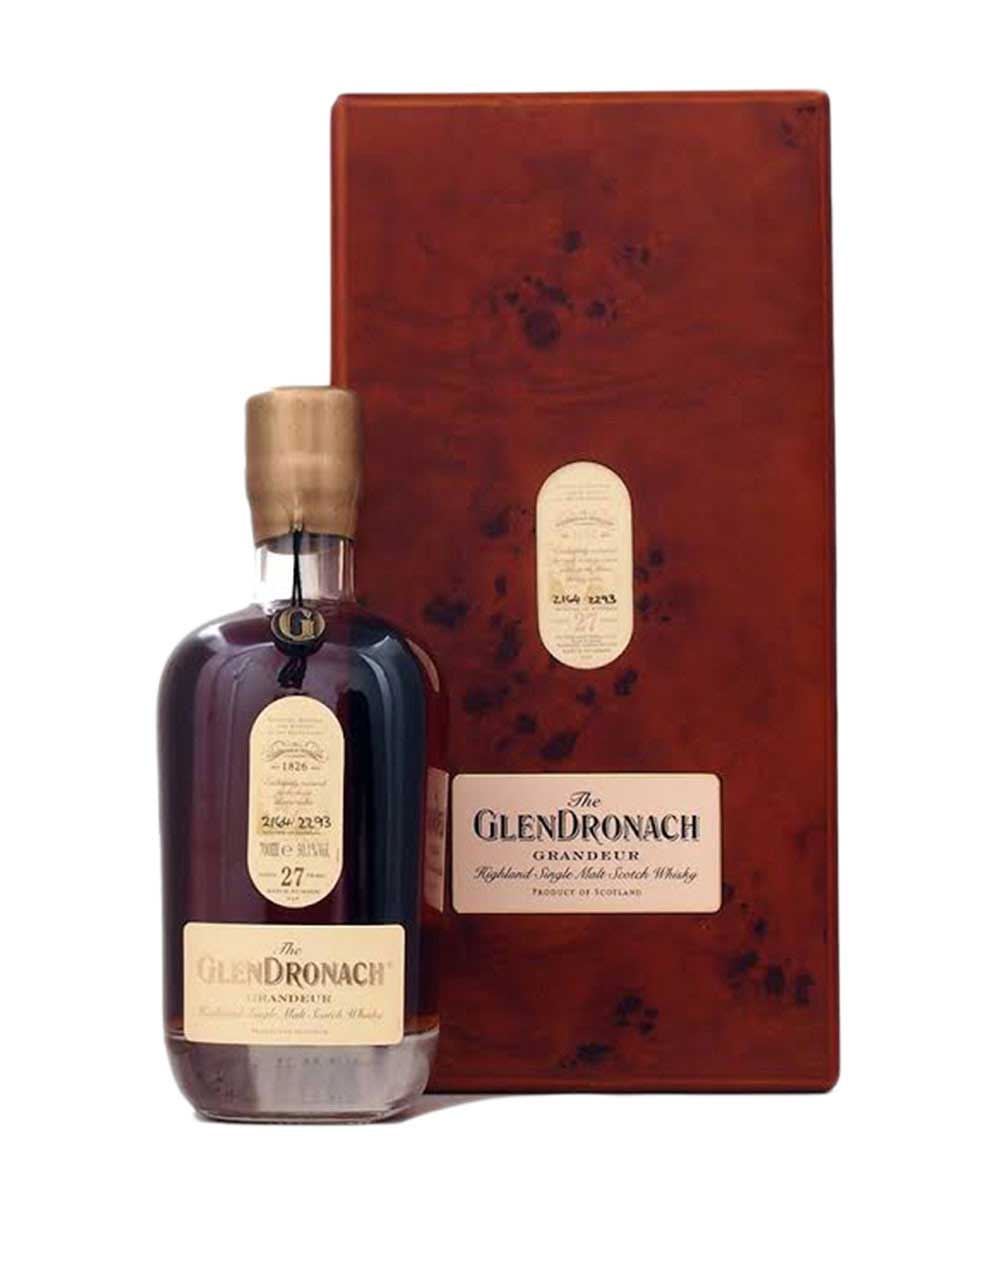 The Glendronach 27 Year Old Grandeur Highland Single Malt Scotch Whisky